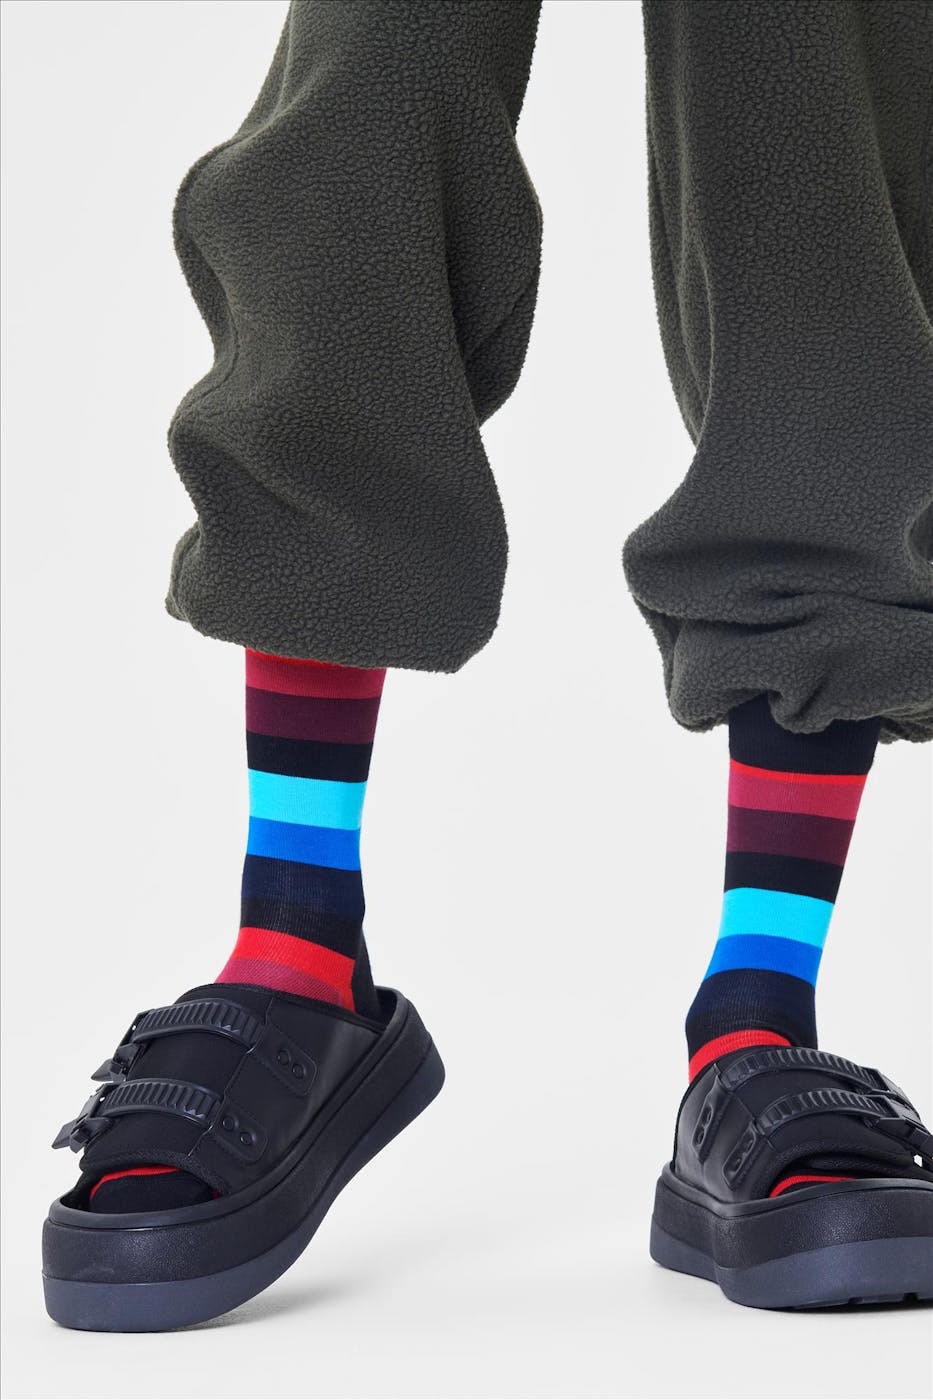 Happy Socks - Zwart-blauwe-rode Stripe sokken, maat: 41-46